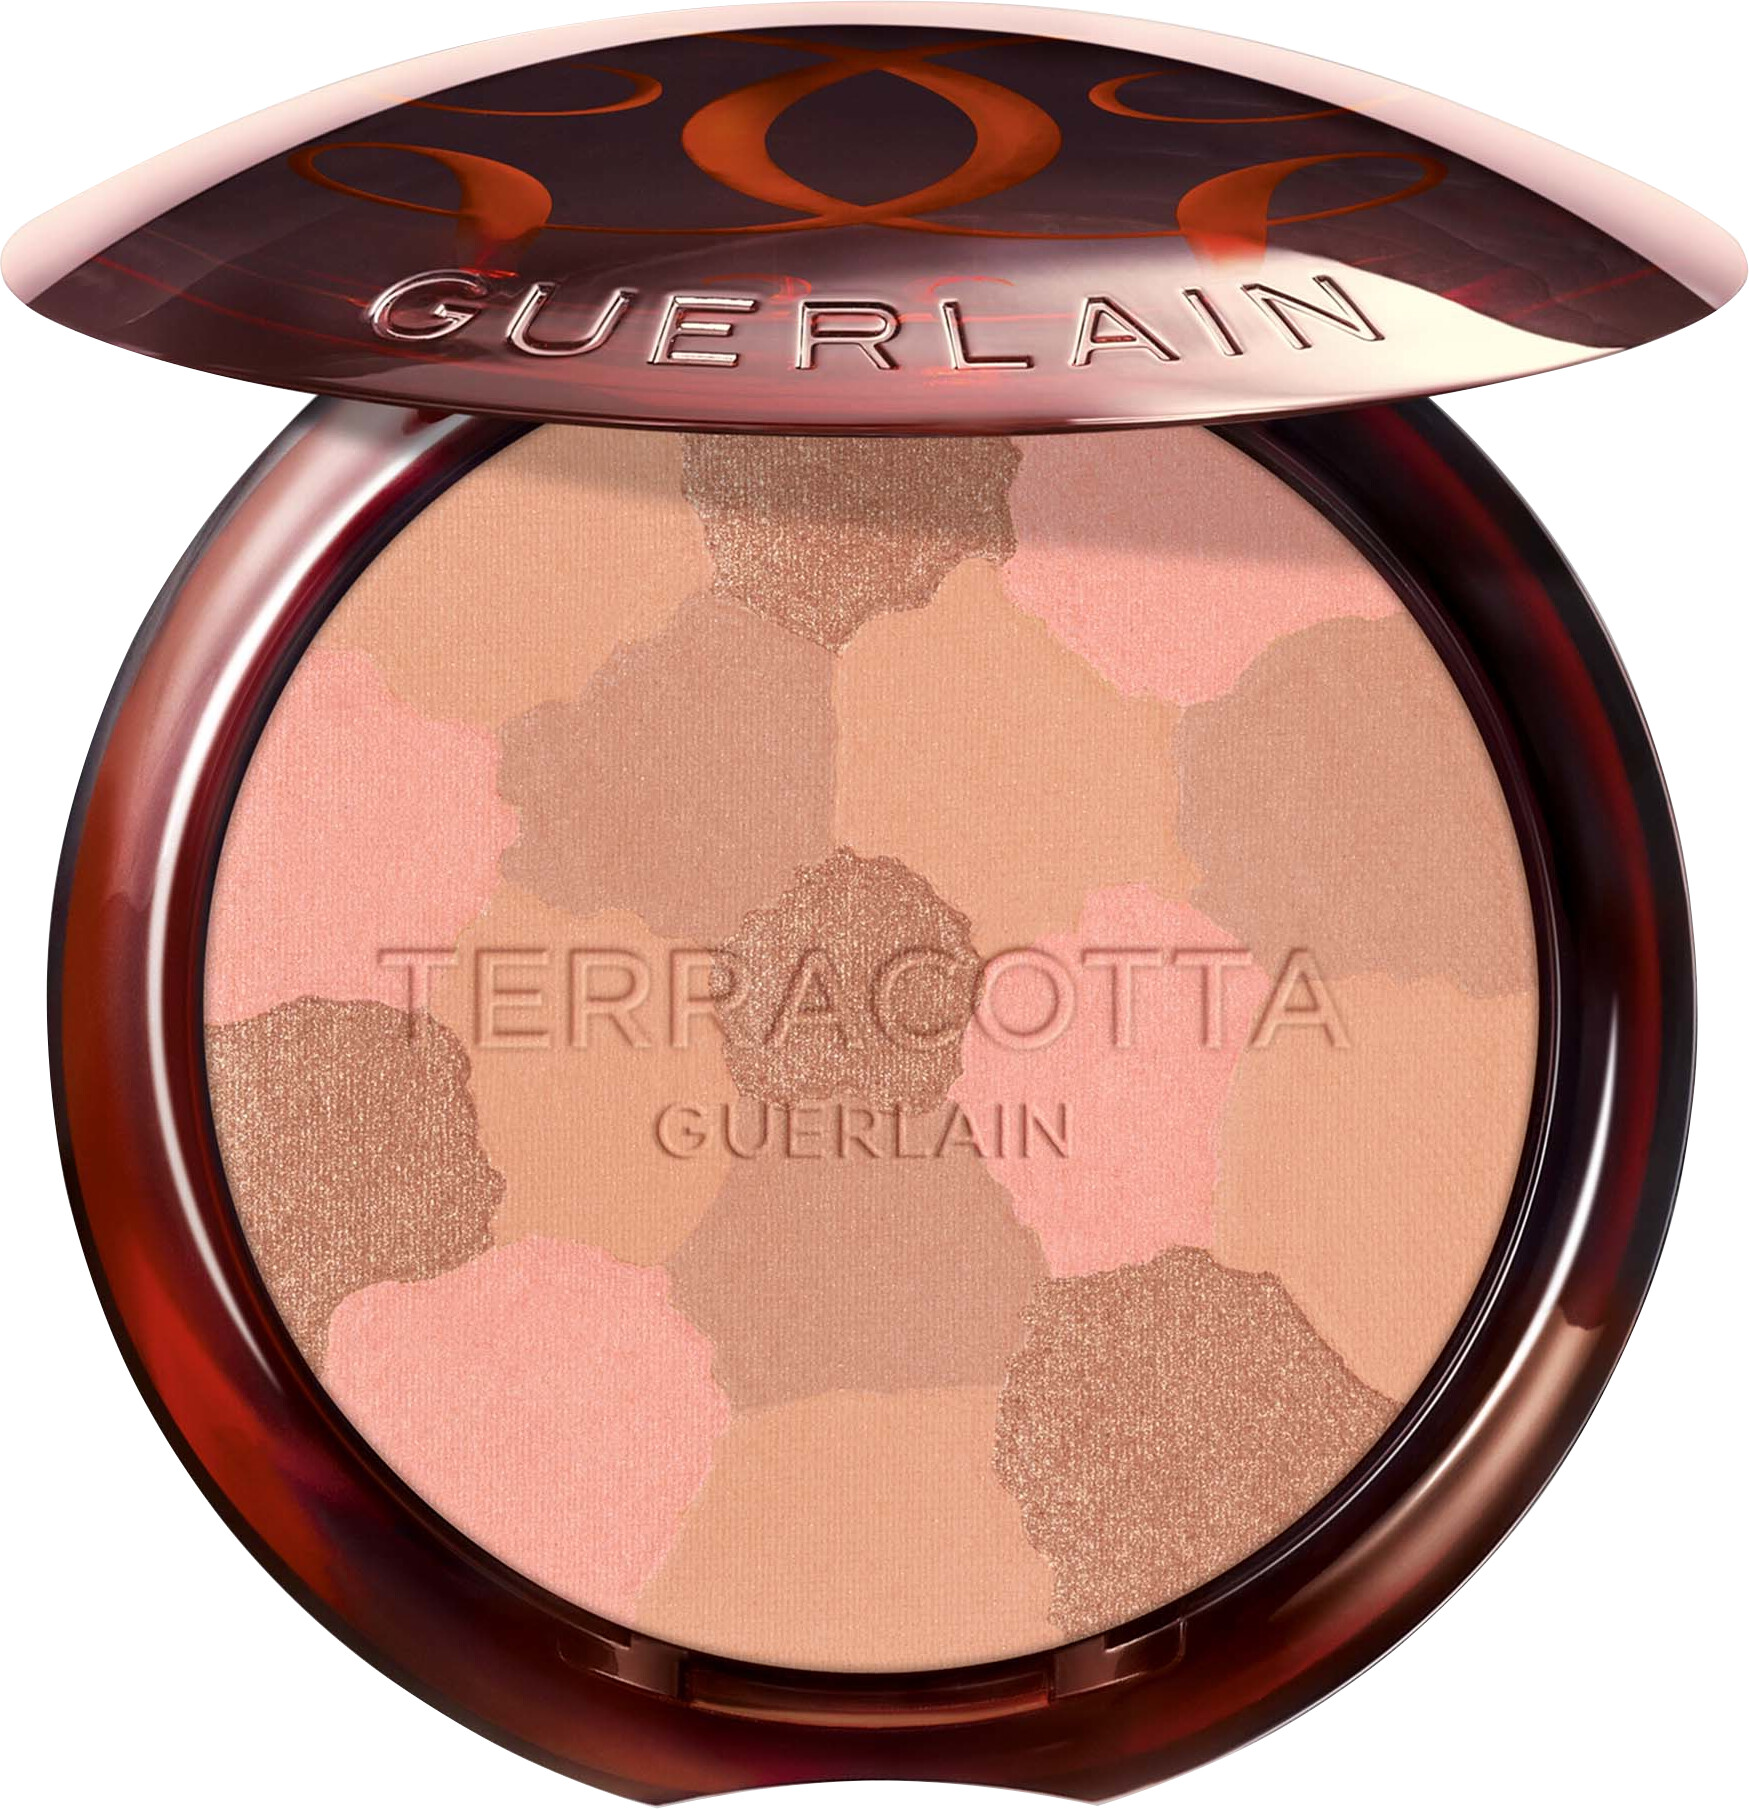 GUERLAIN Terracotta Light The Sun-Kissed Healthy Glow Powder 10g 00 - Light Cool